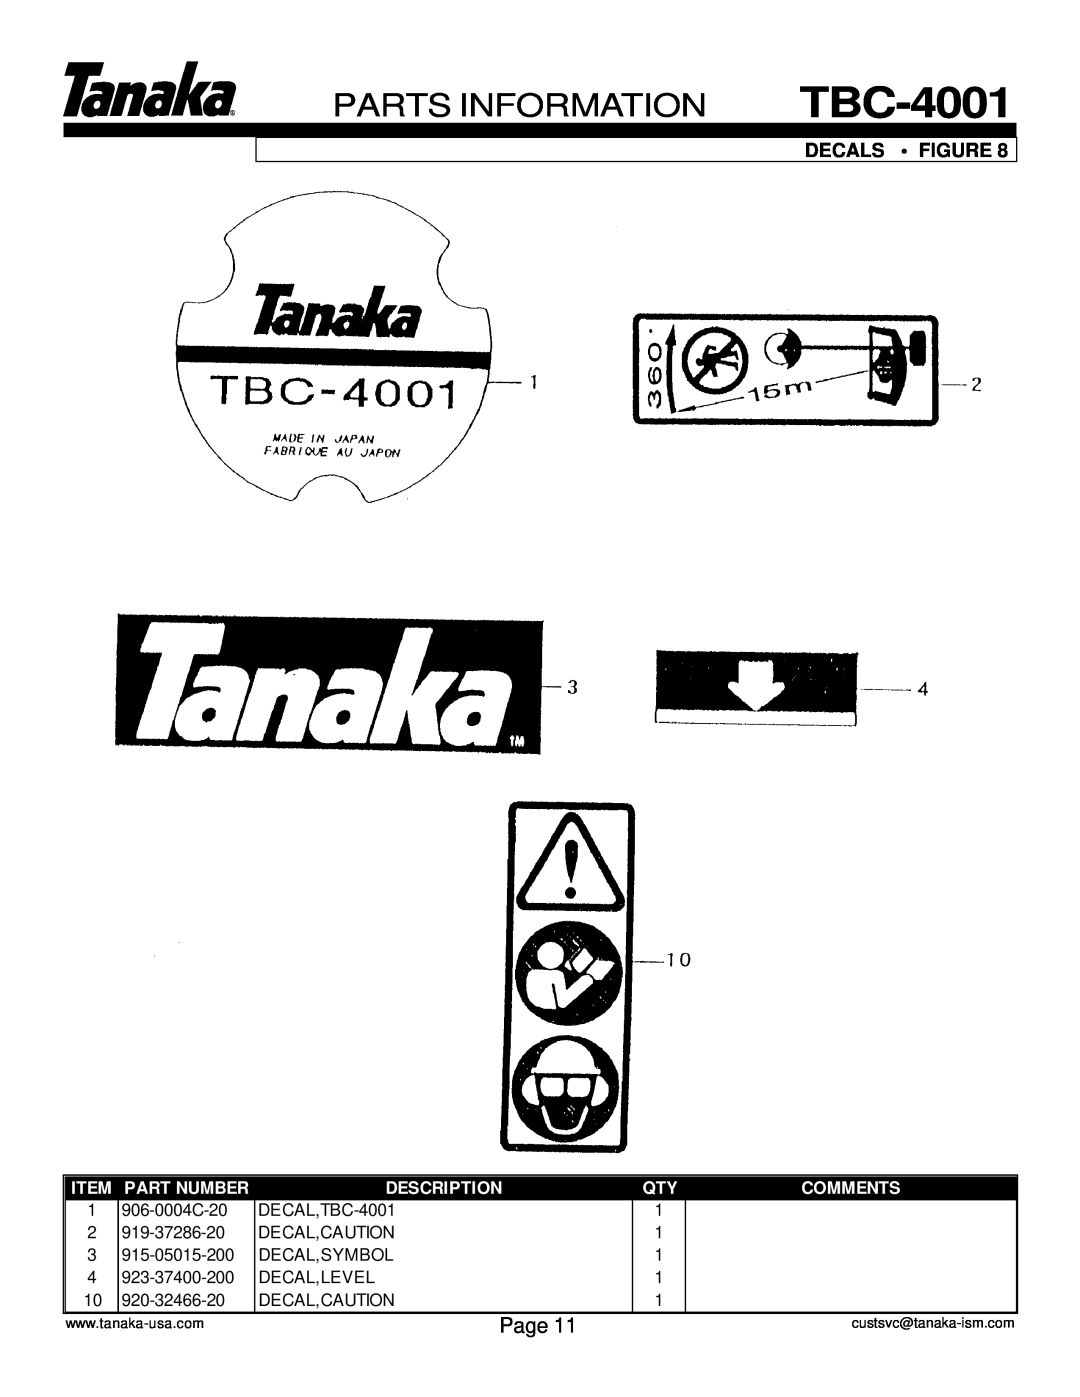 Tanaka TBC-4001 manual Parts Information, Page, Decals Figure, Part Number, Description, Comments 